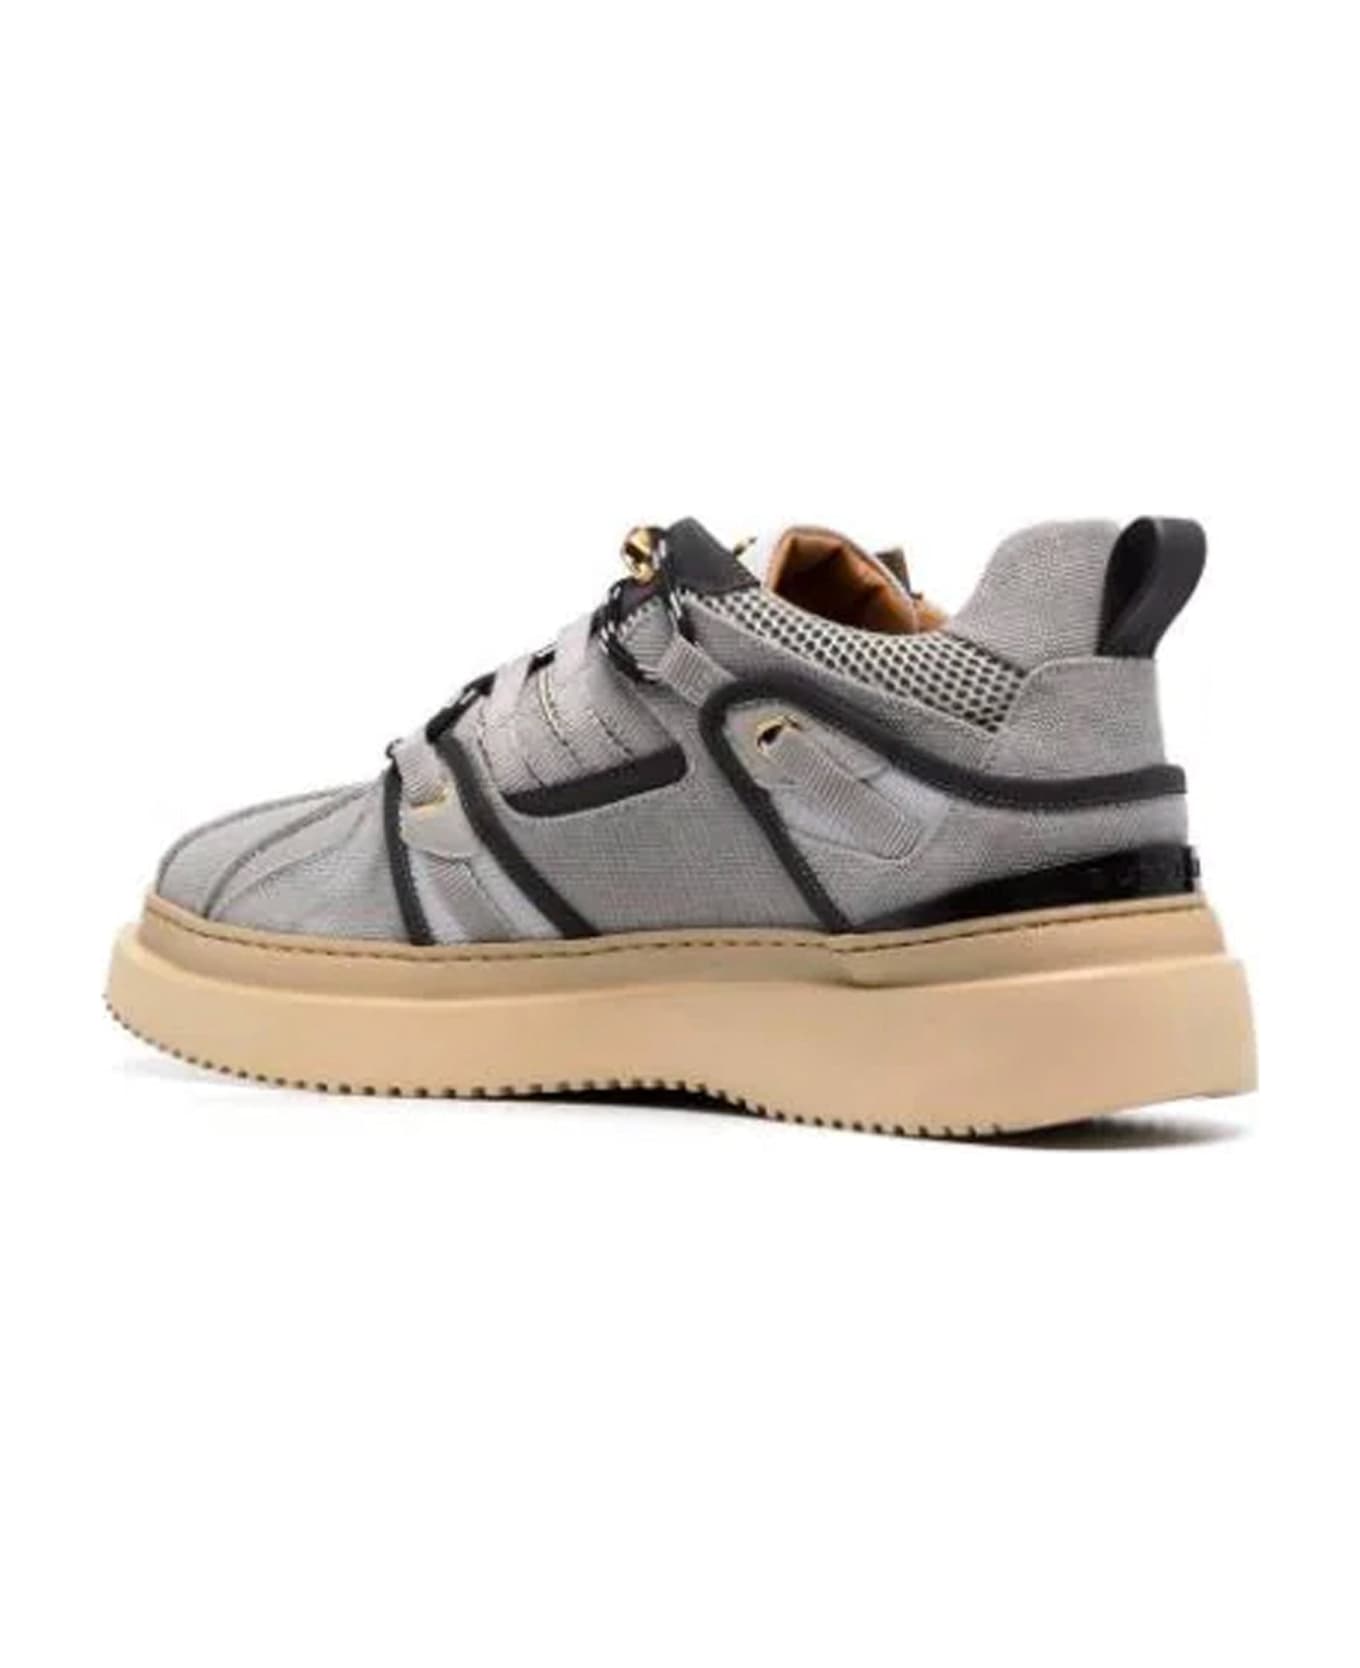 Buscemi Fabric Sneakers - Gray